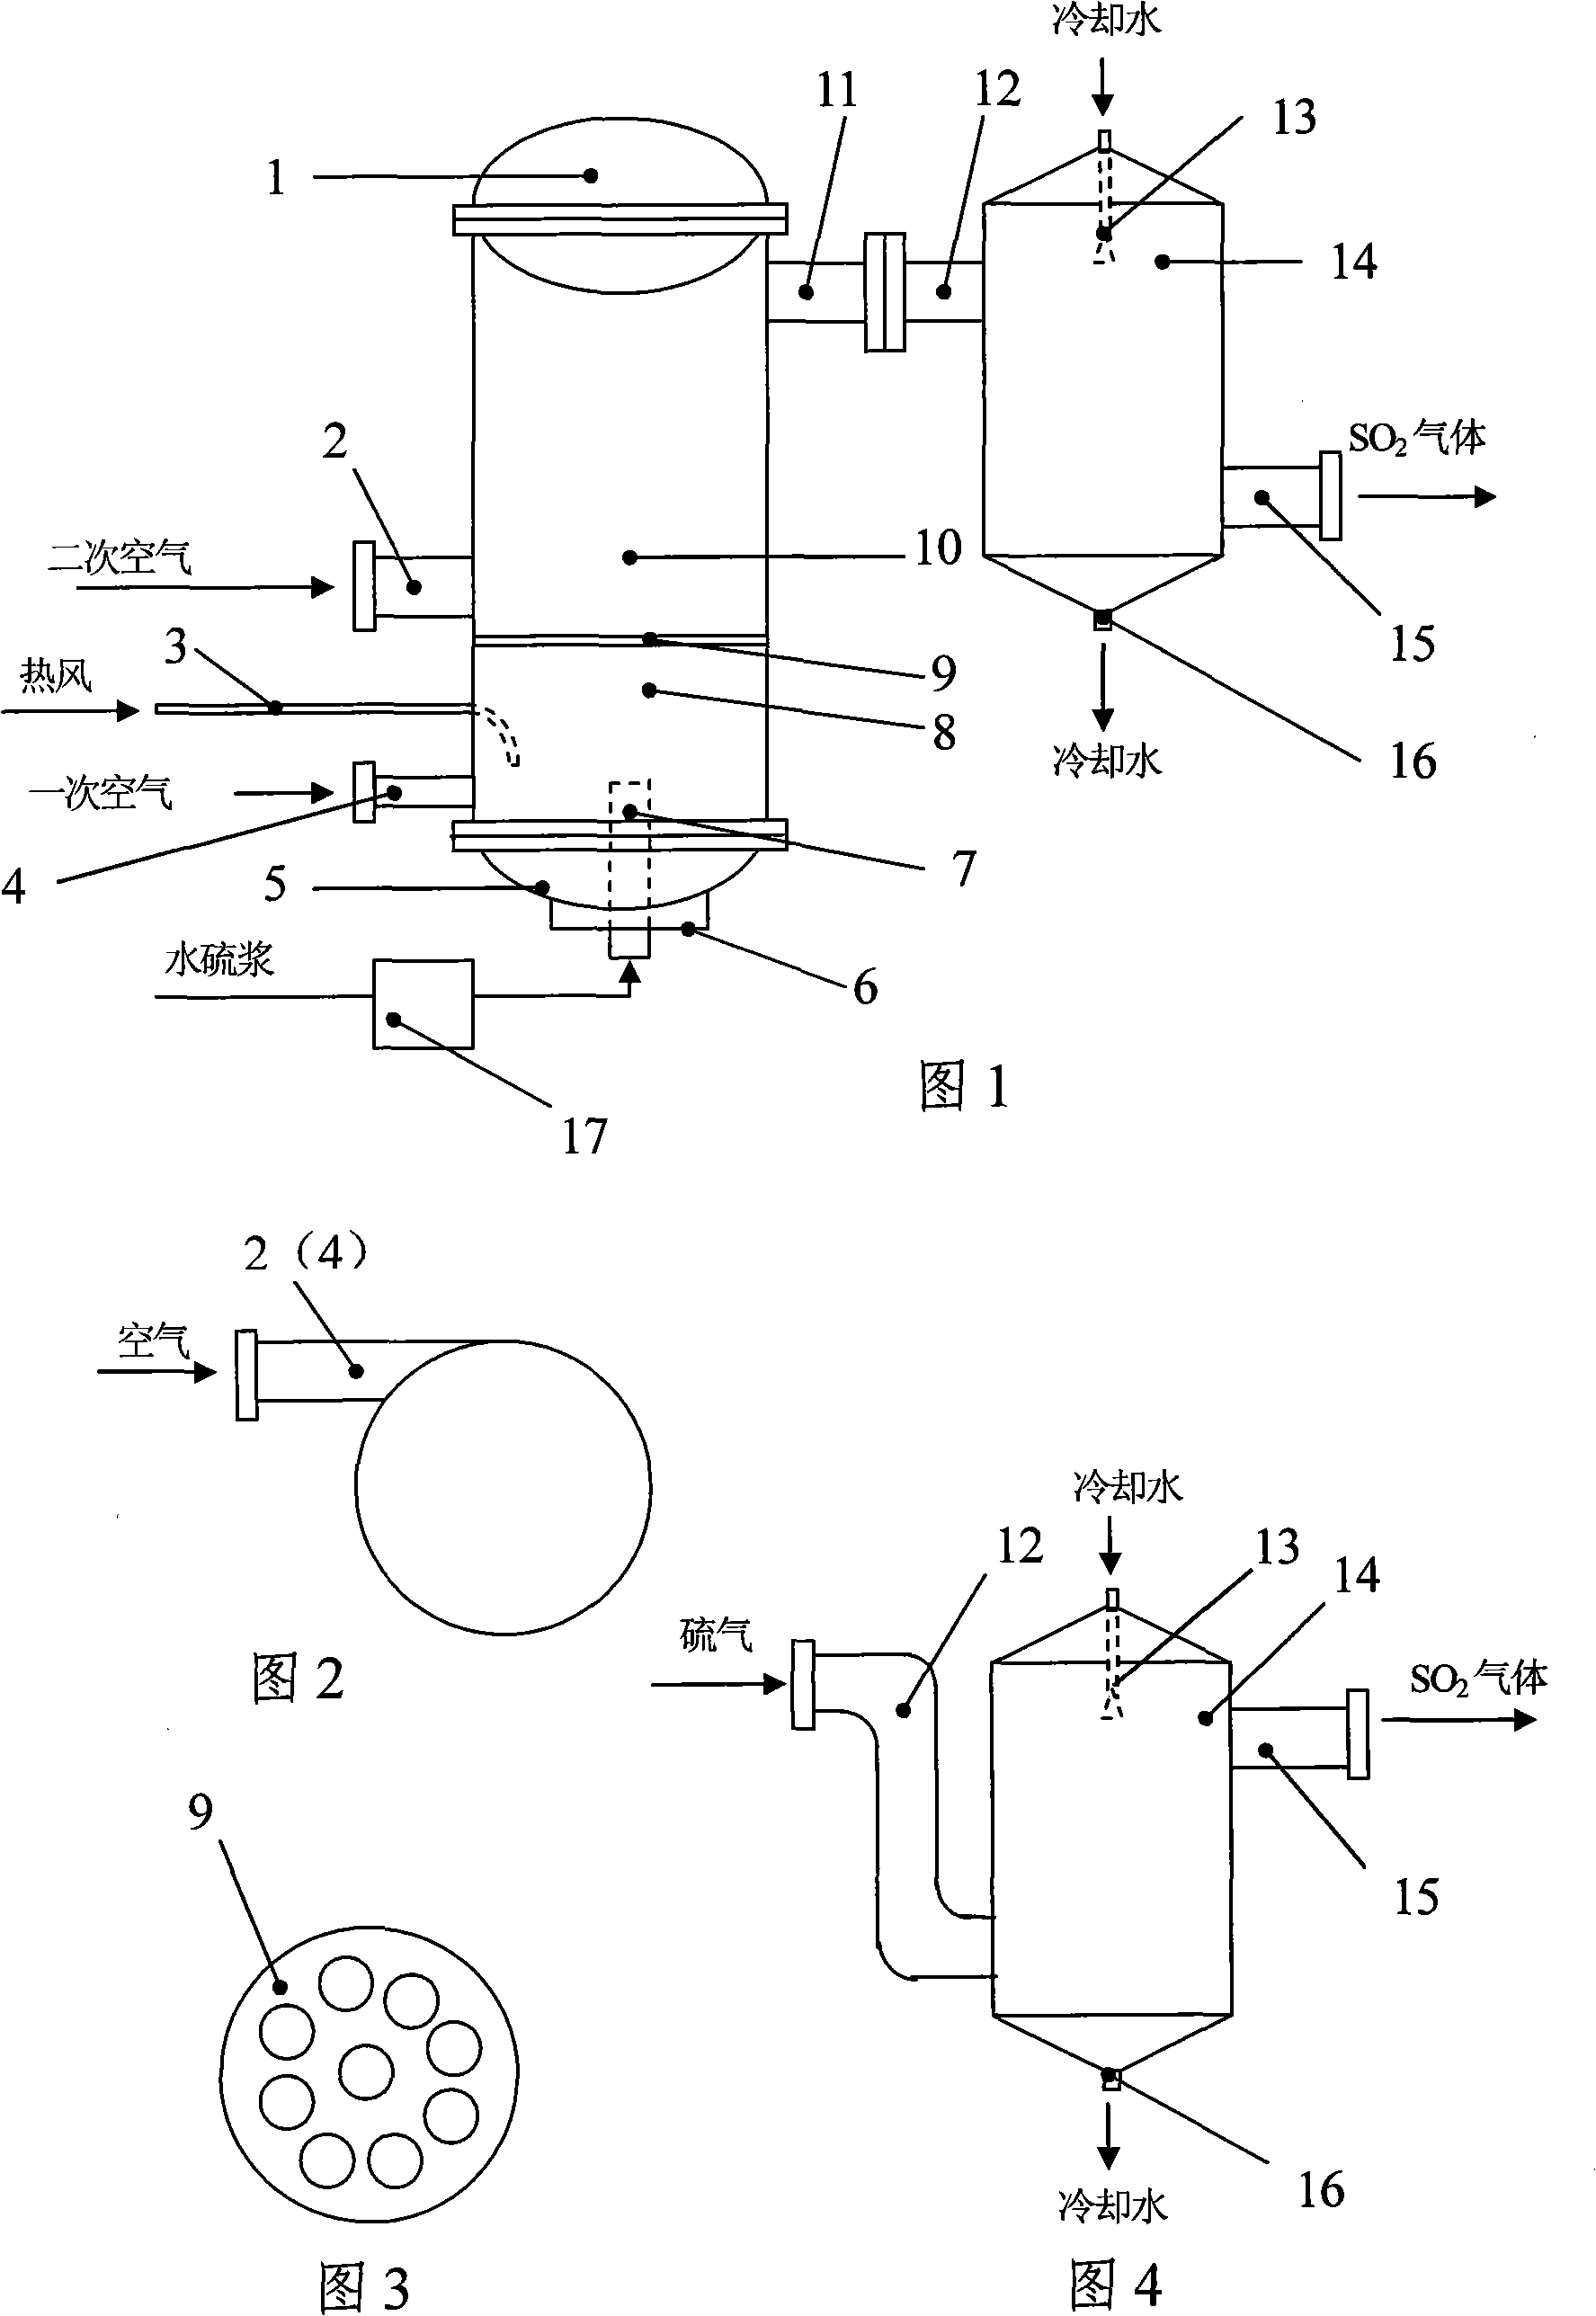 Method and apparatus for preparing sulphur dioxide gas